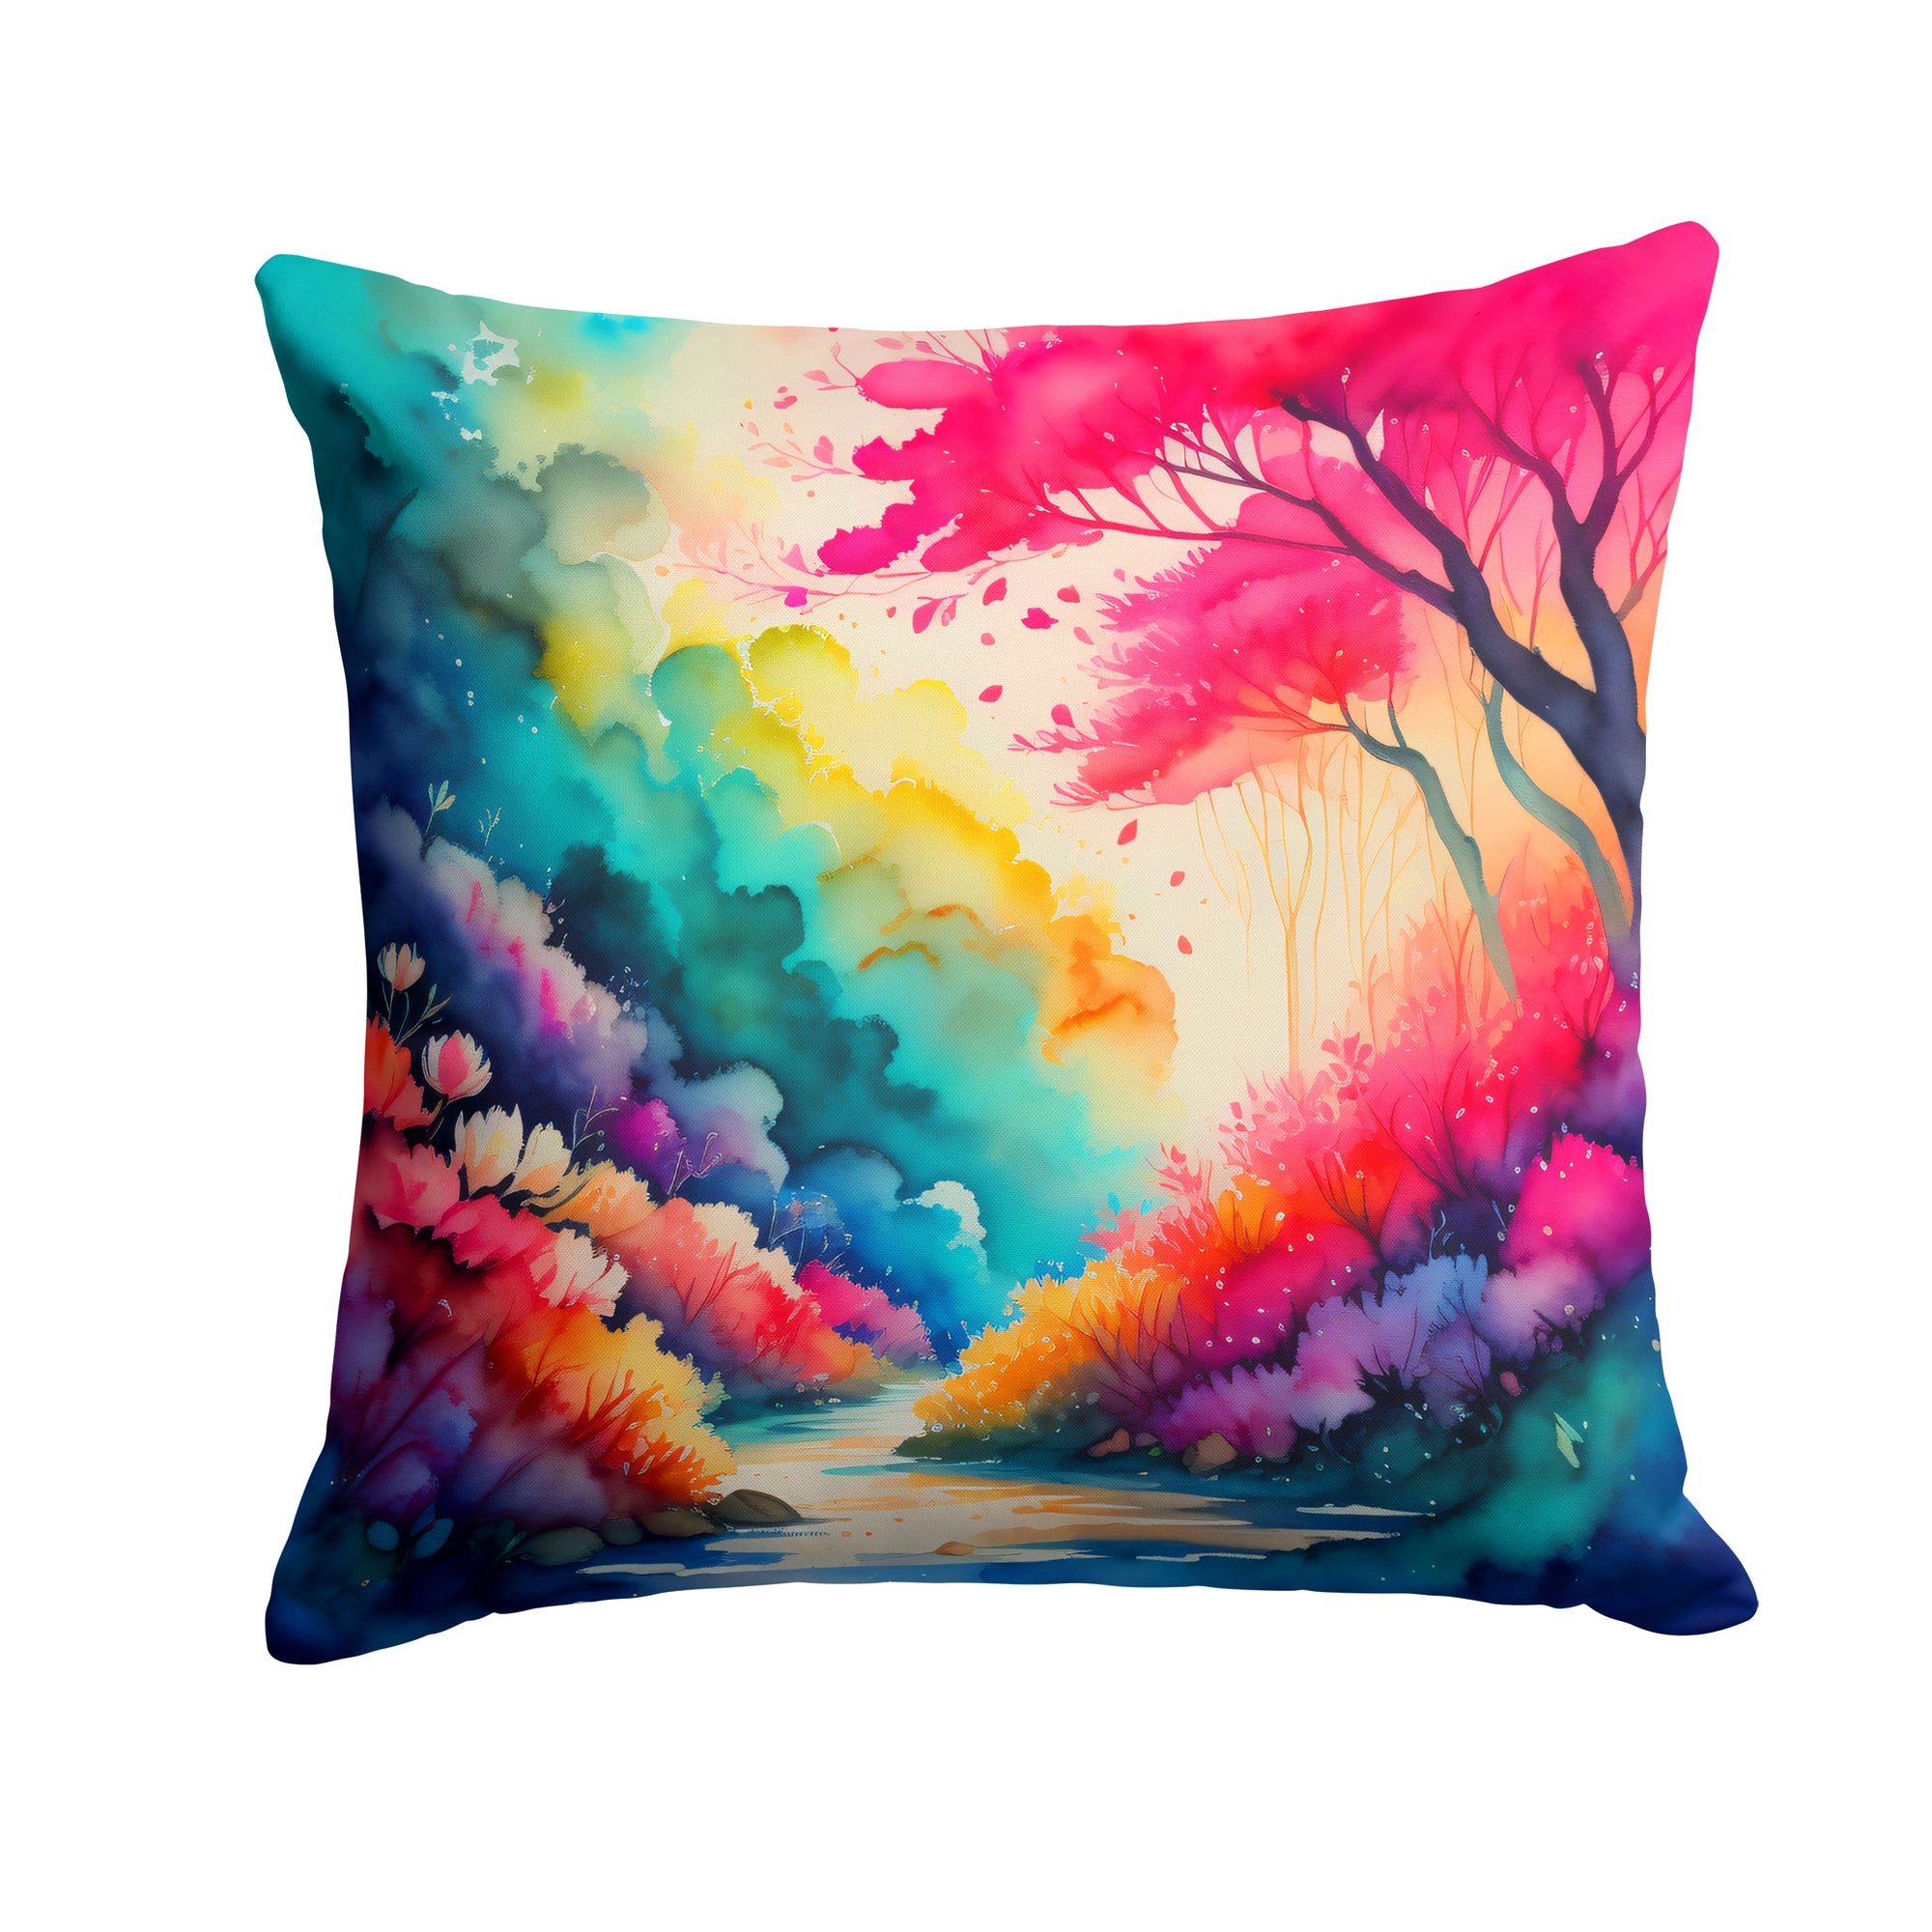 Buy this Colorful Azaleas Fabric Decorative Pillow